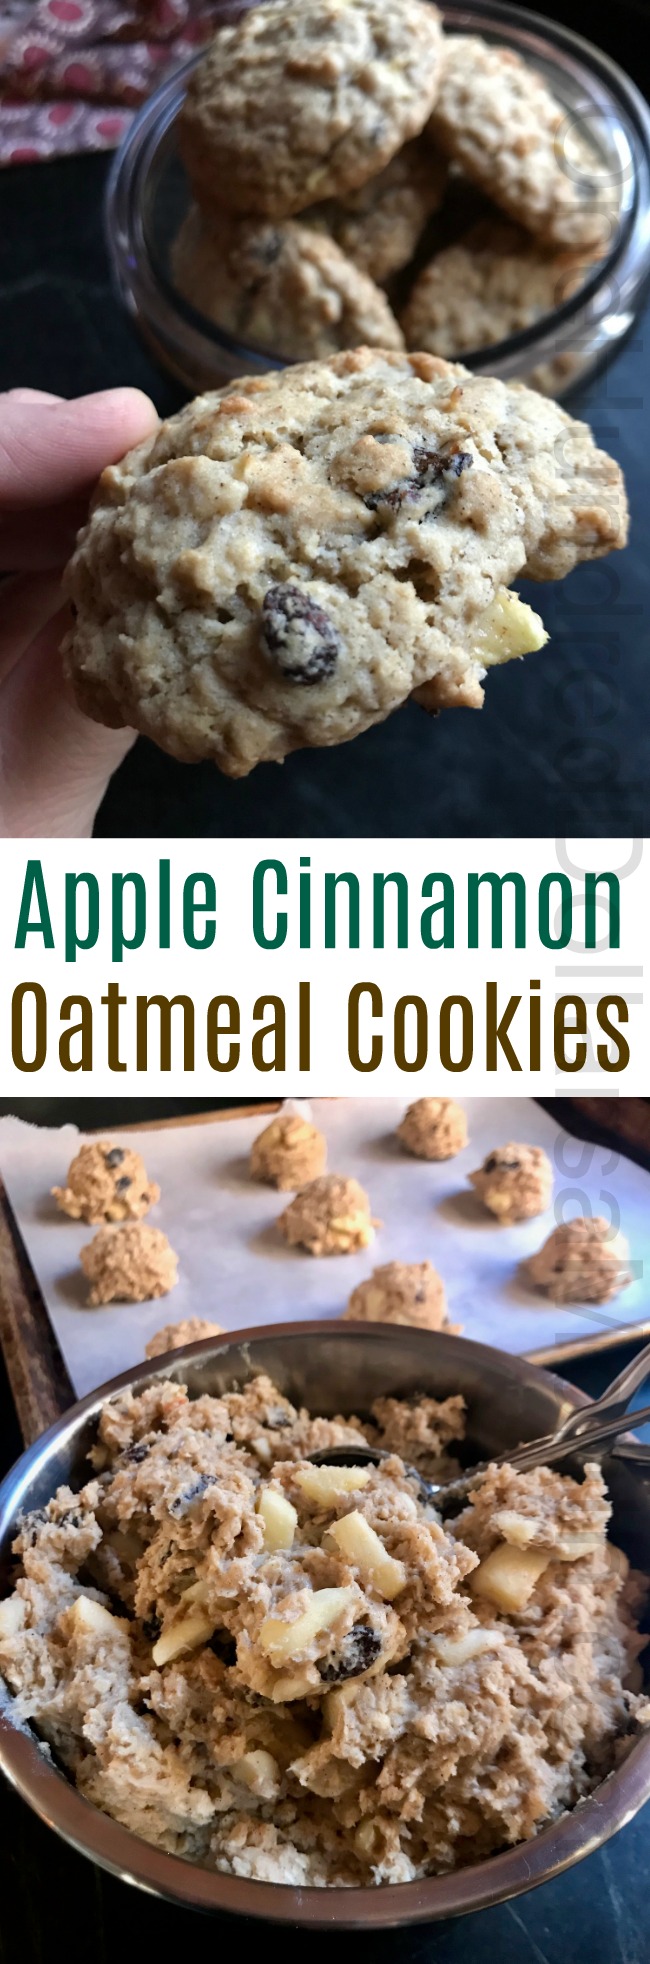 Apple Cinnamon Oatmeal Cookies